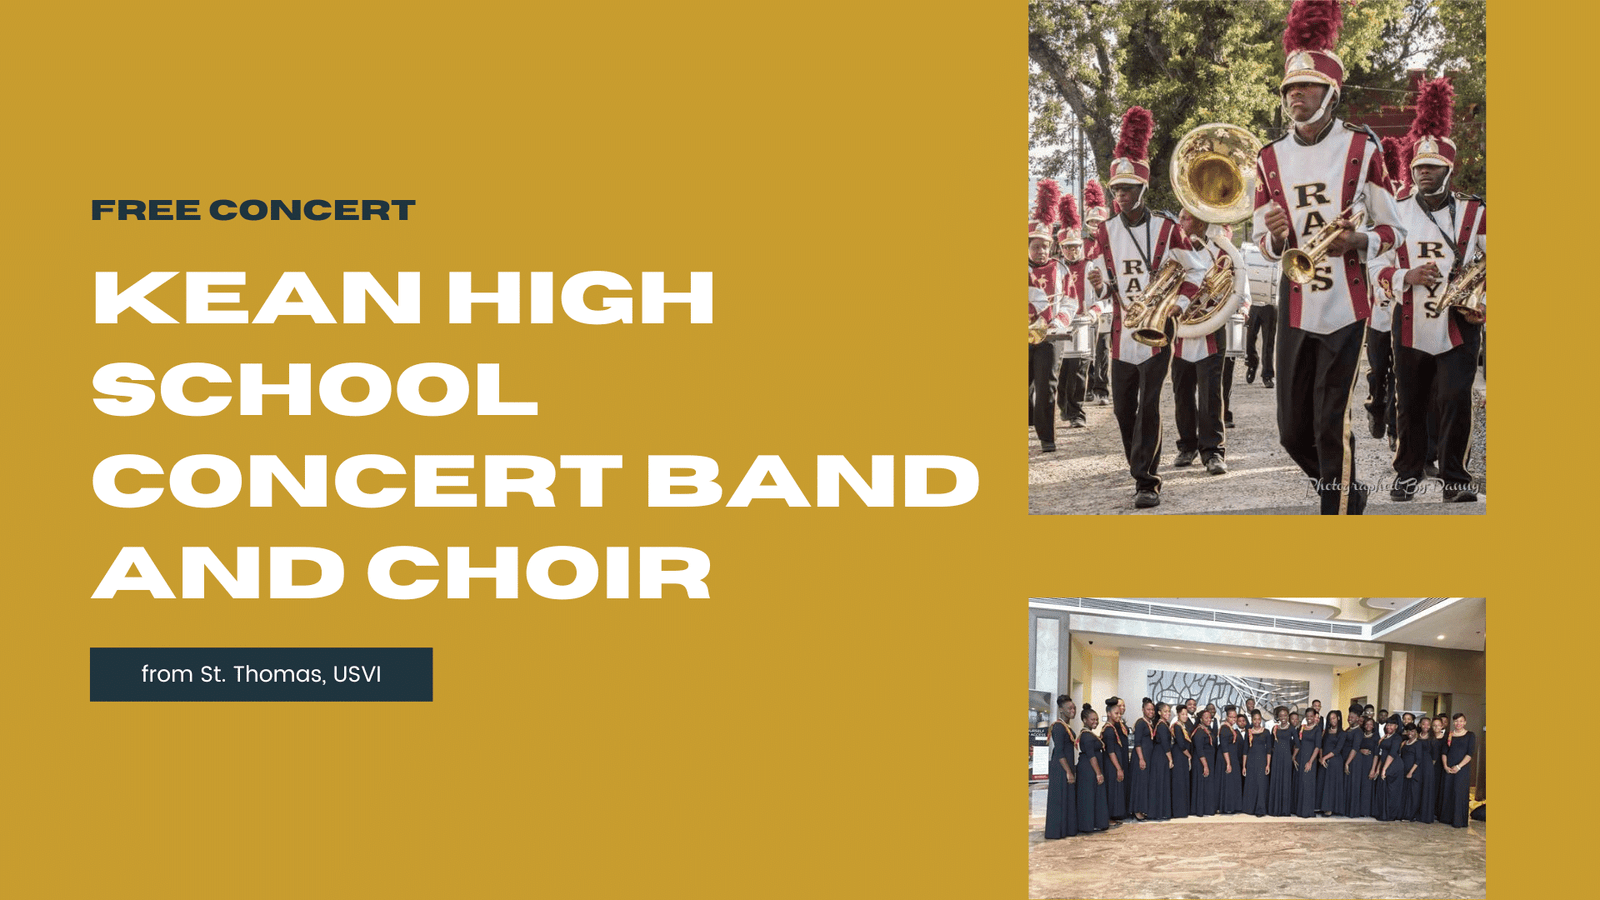 Kean High School Concert Band and Choir Concert